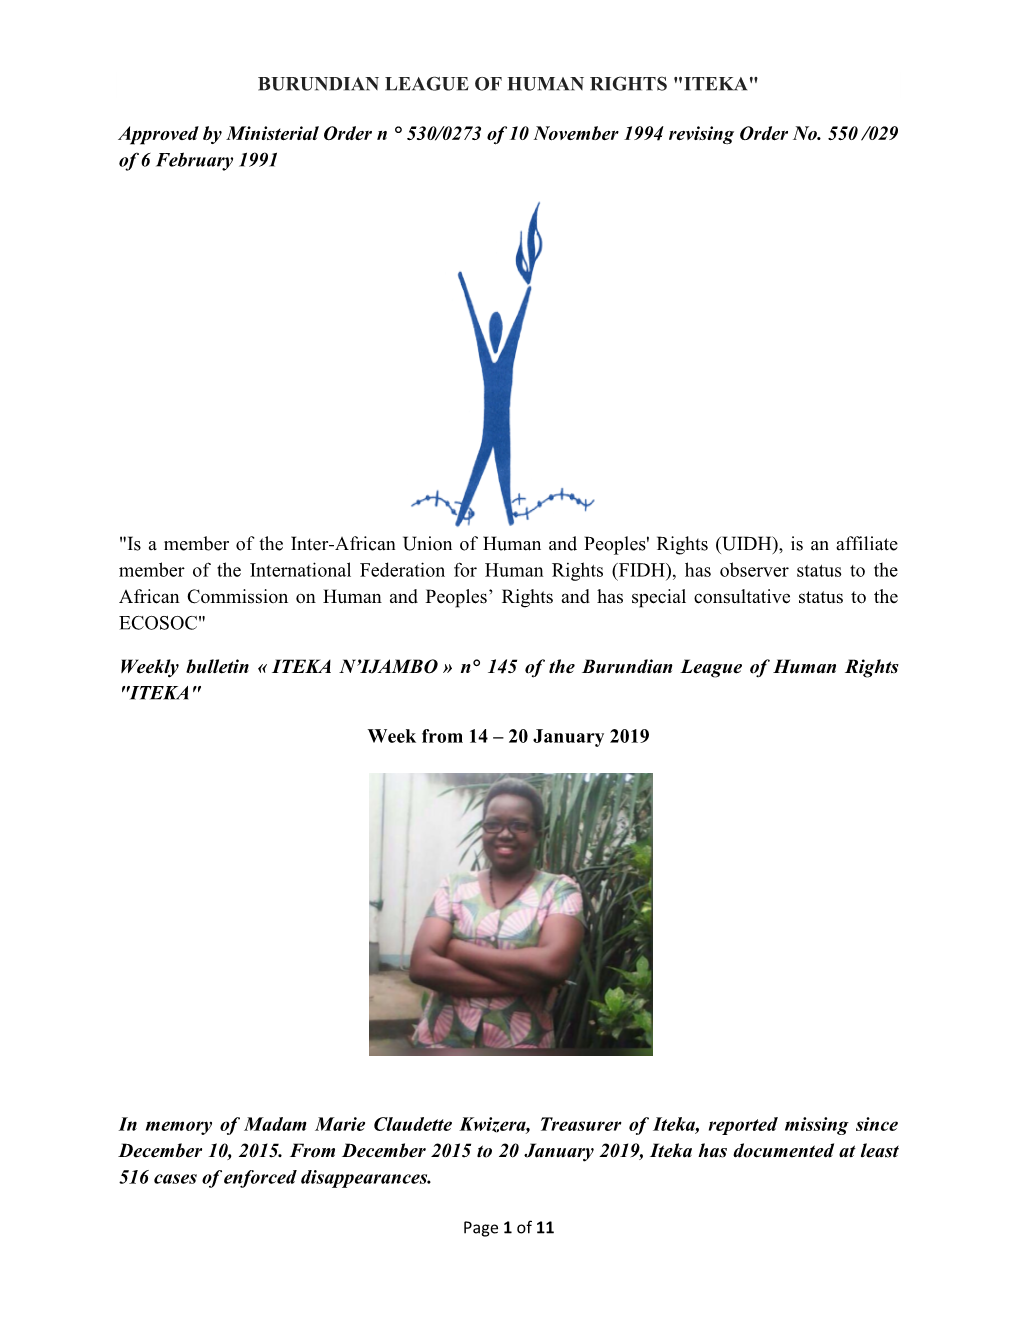 Burundian League of Human Rights "Iteka"